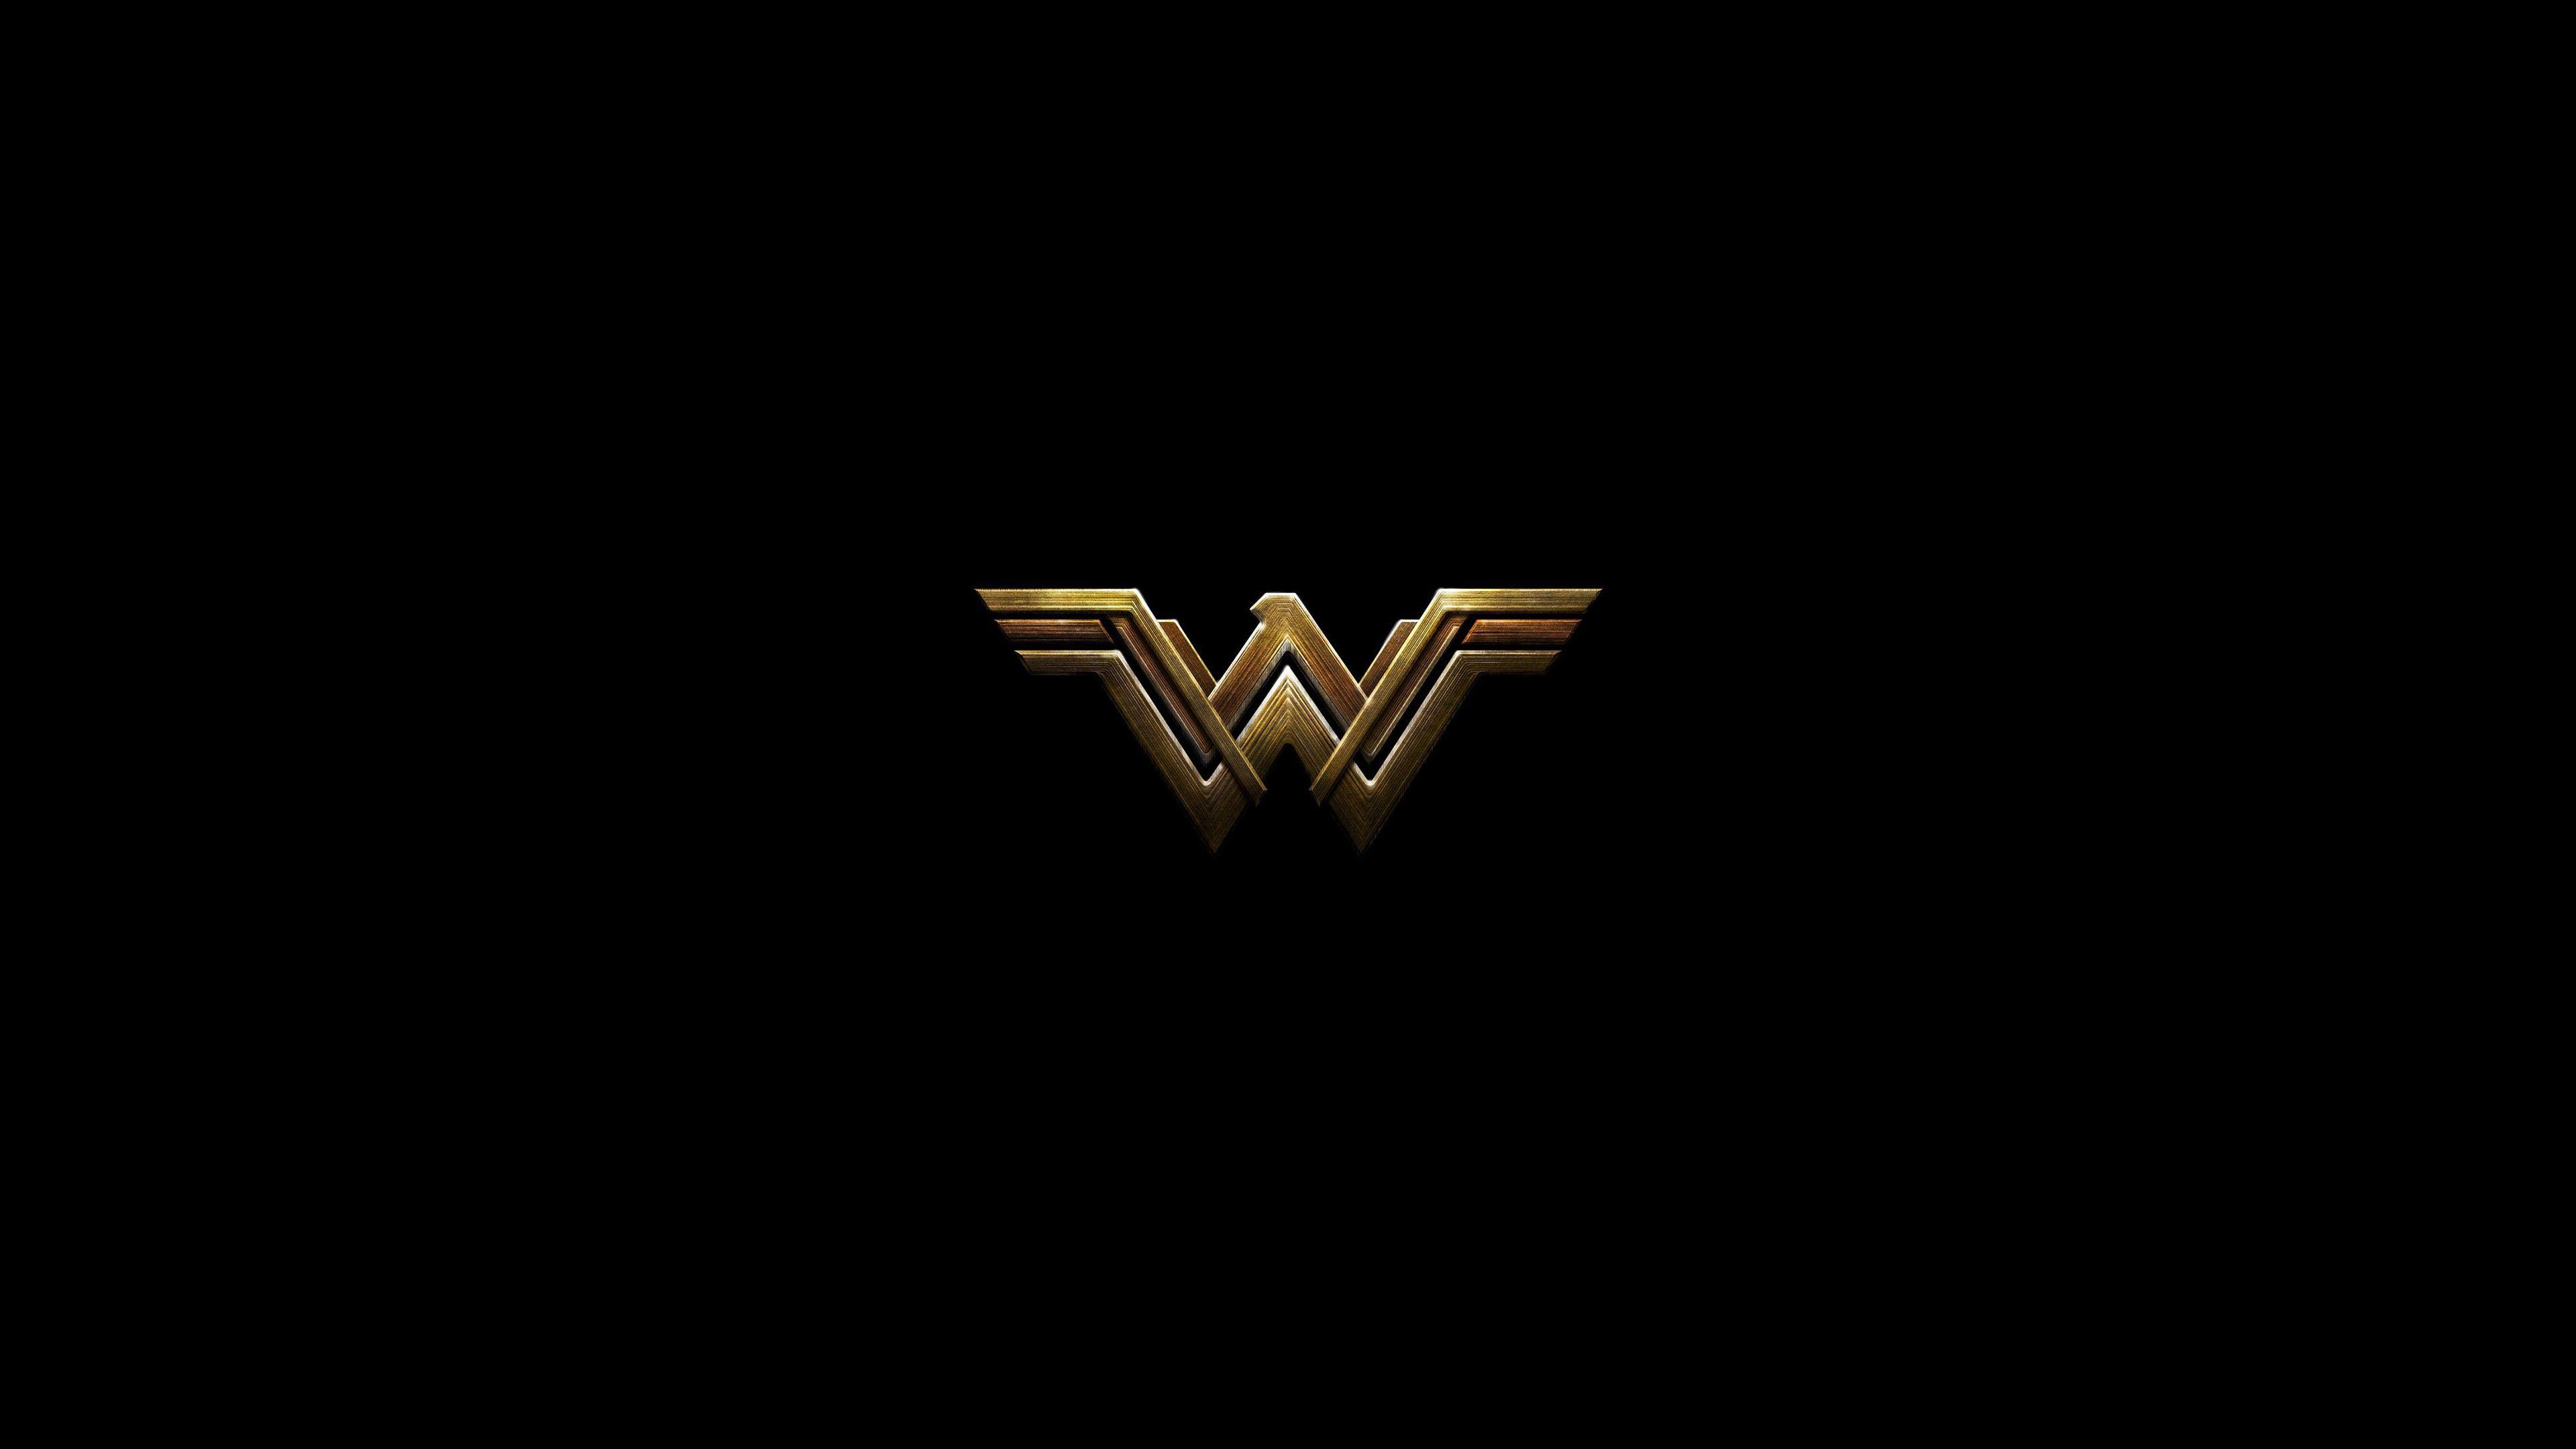 Dark Logo - Wonder Woman Dark Logo 4k, HD Superheroes, 4k Wallpapers, Images ...